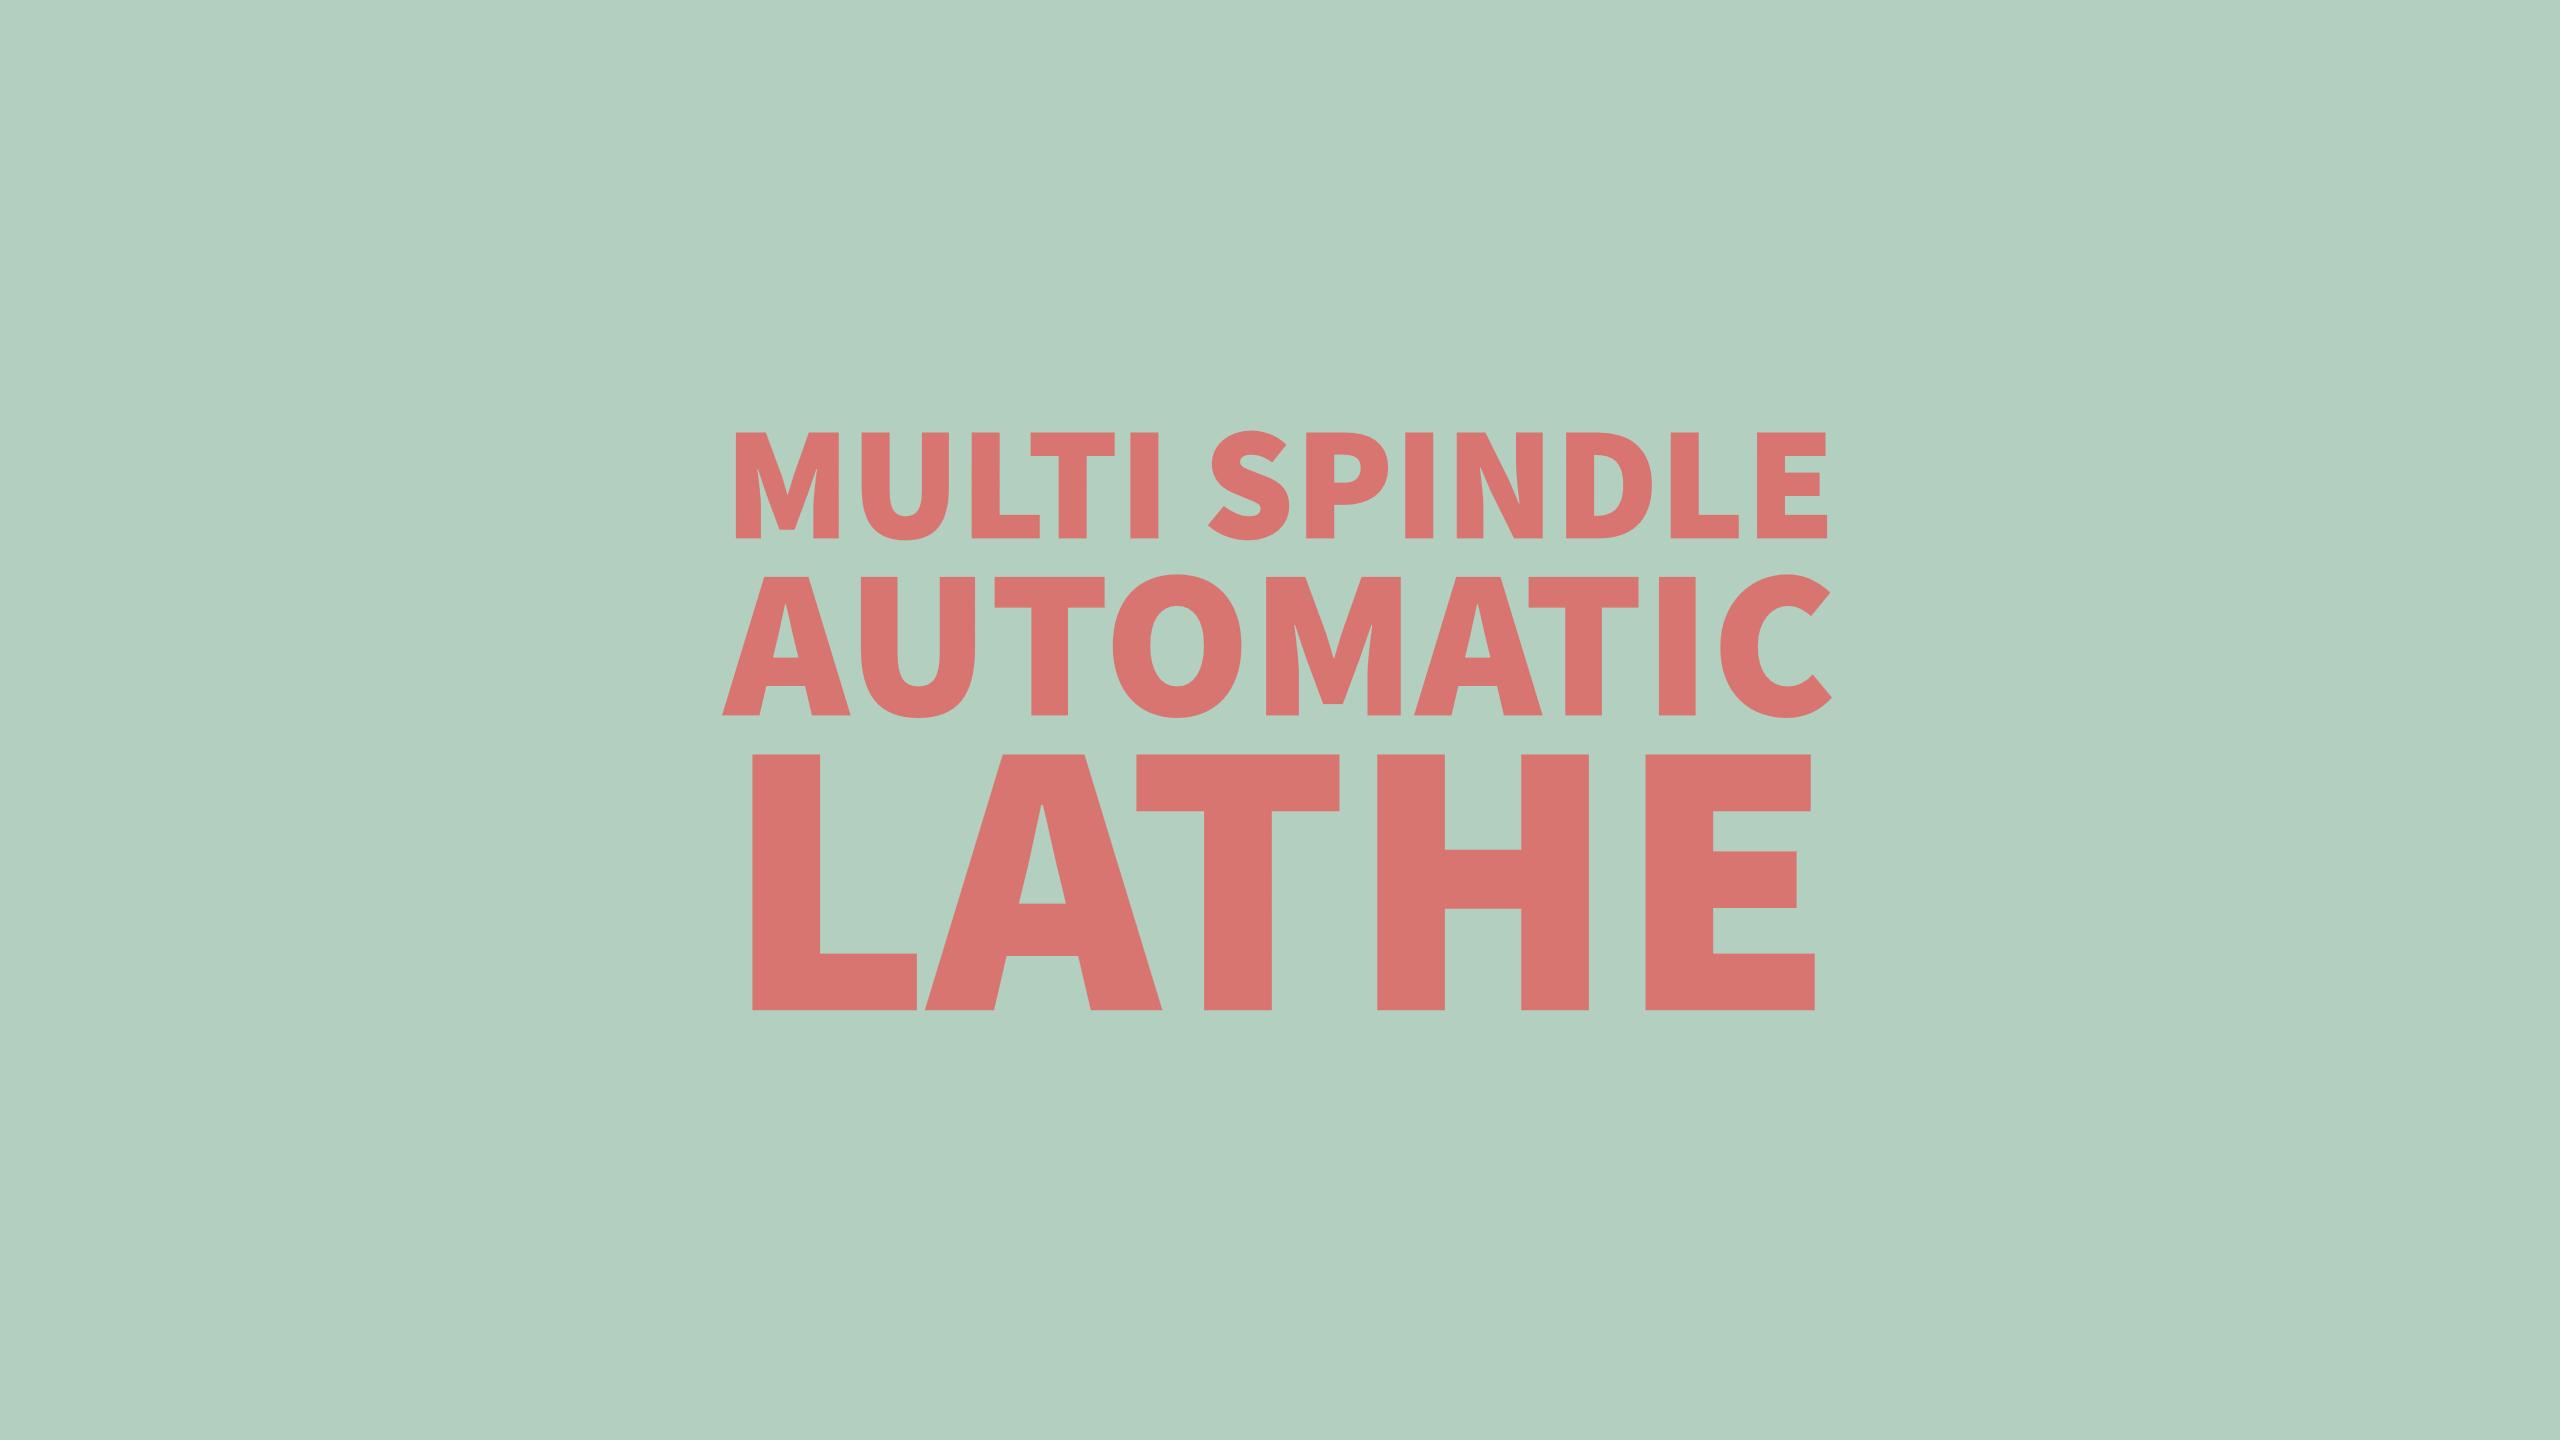 Automatic lathes